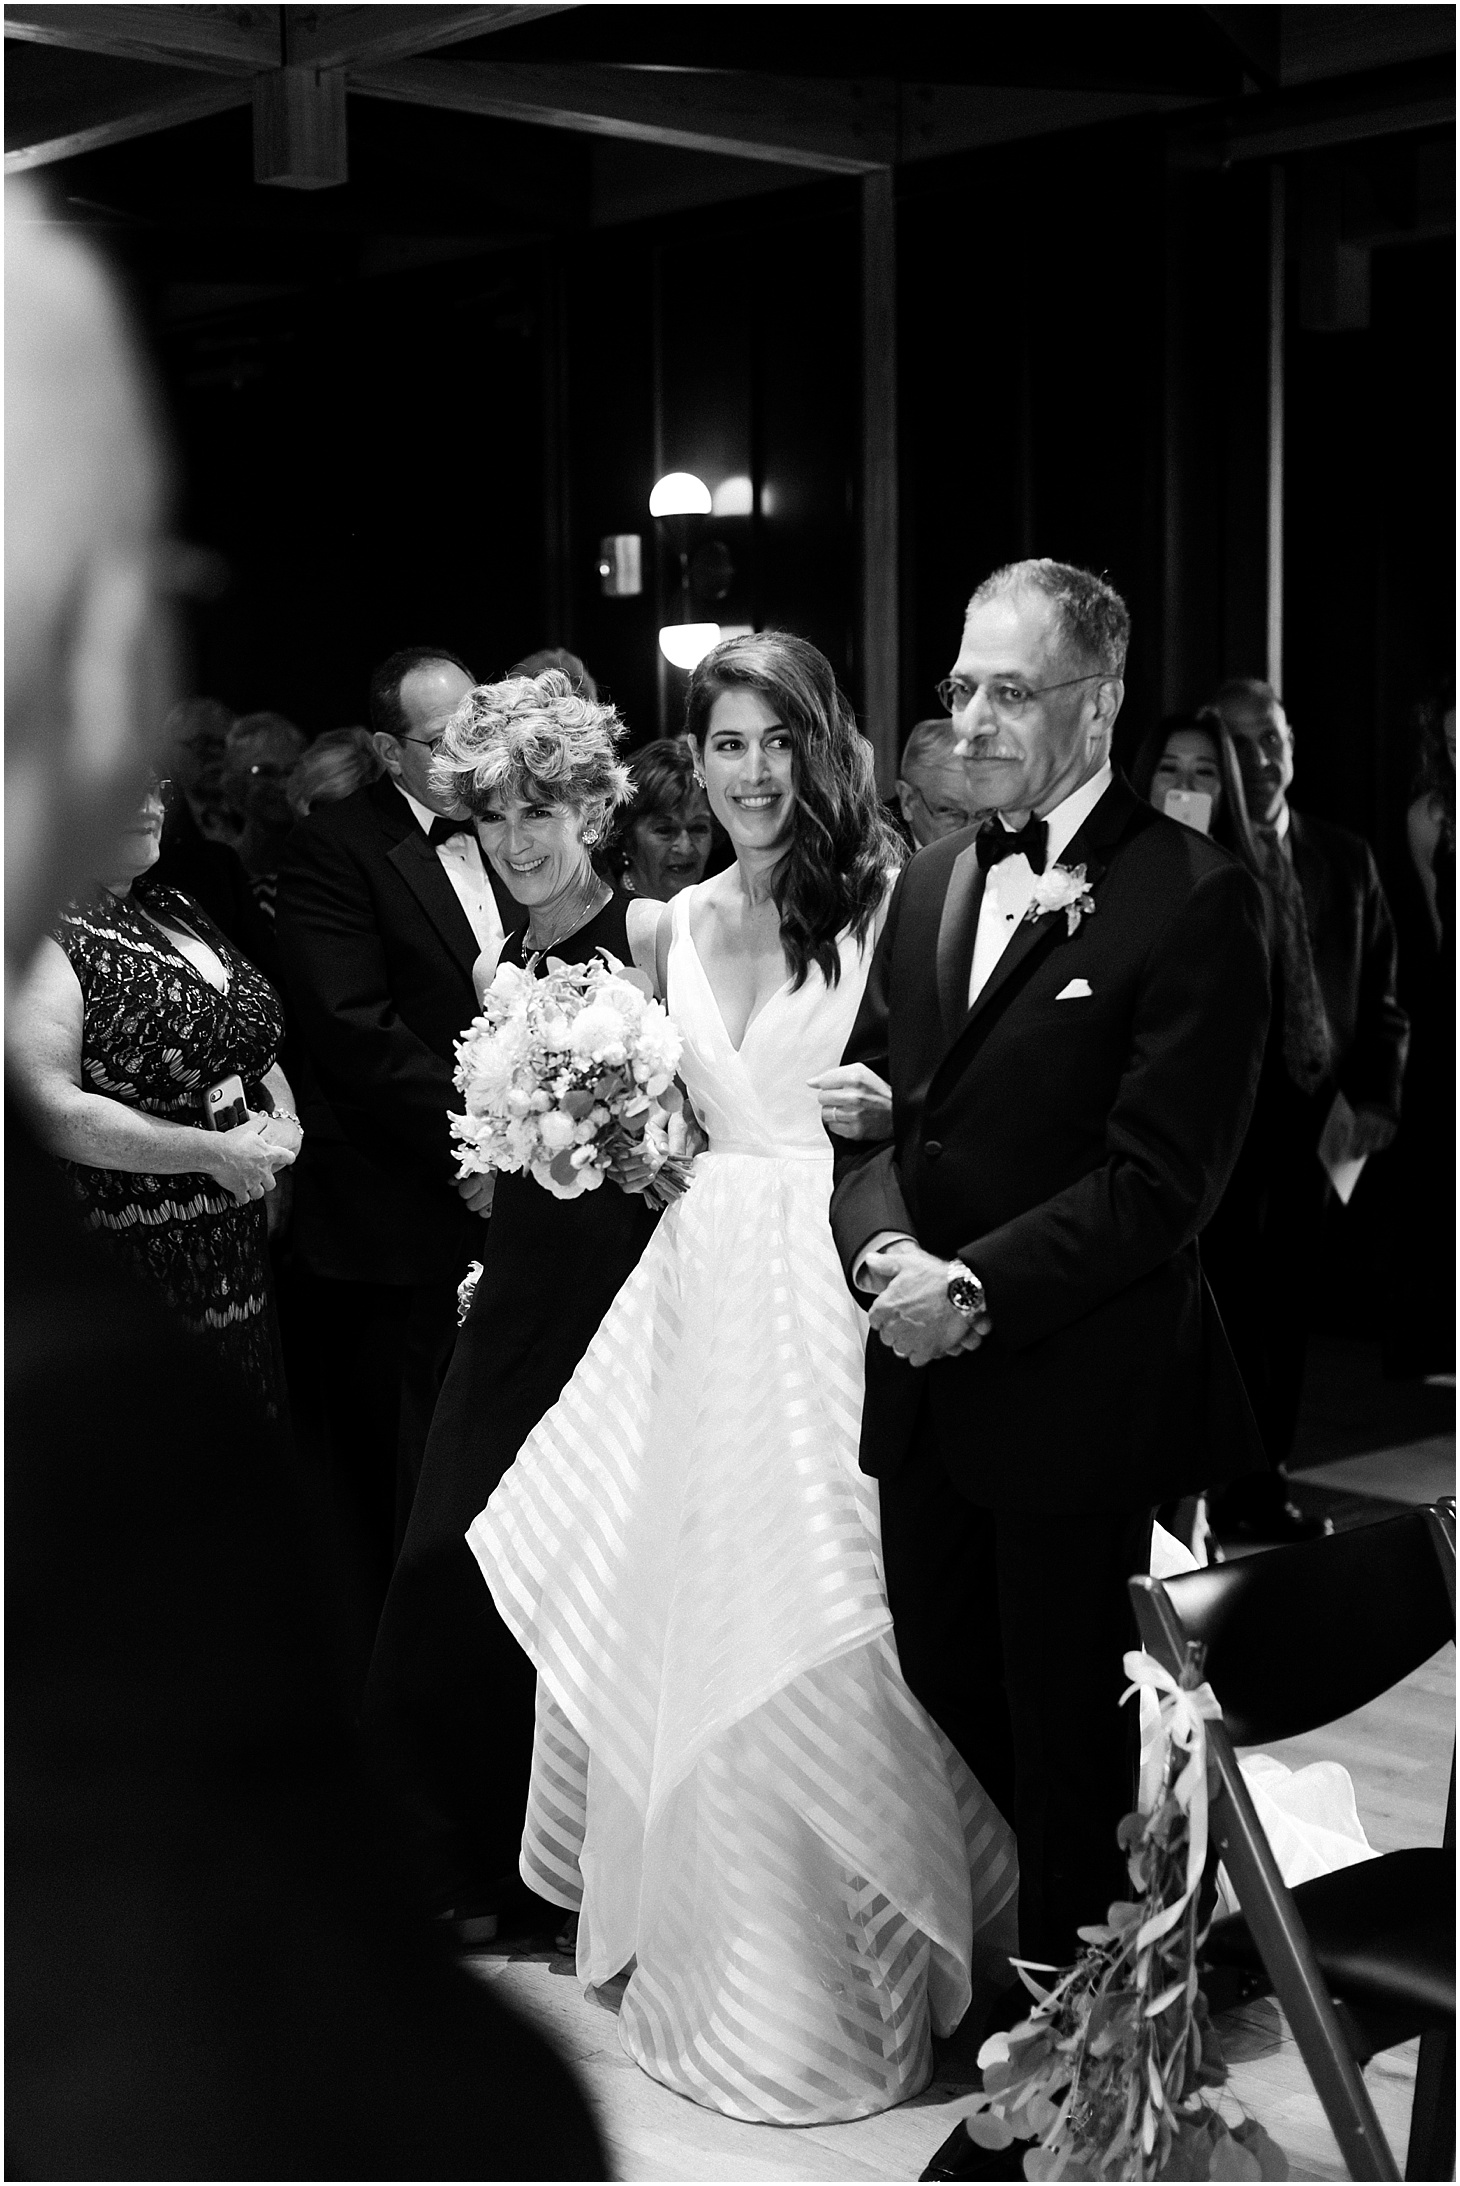 Wedding Ceremony at District Winery | Chic and Modern Interfaith Wedding in Washington, DC | Sarah Bradshaw Photography